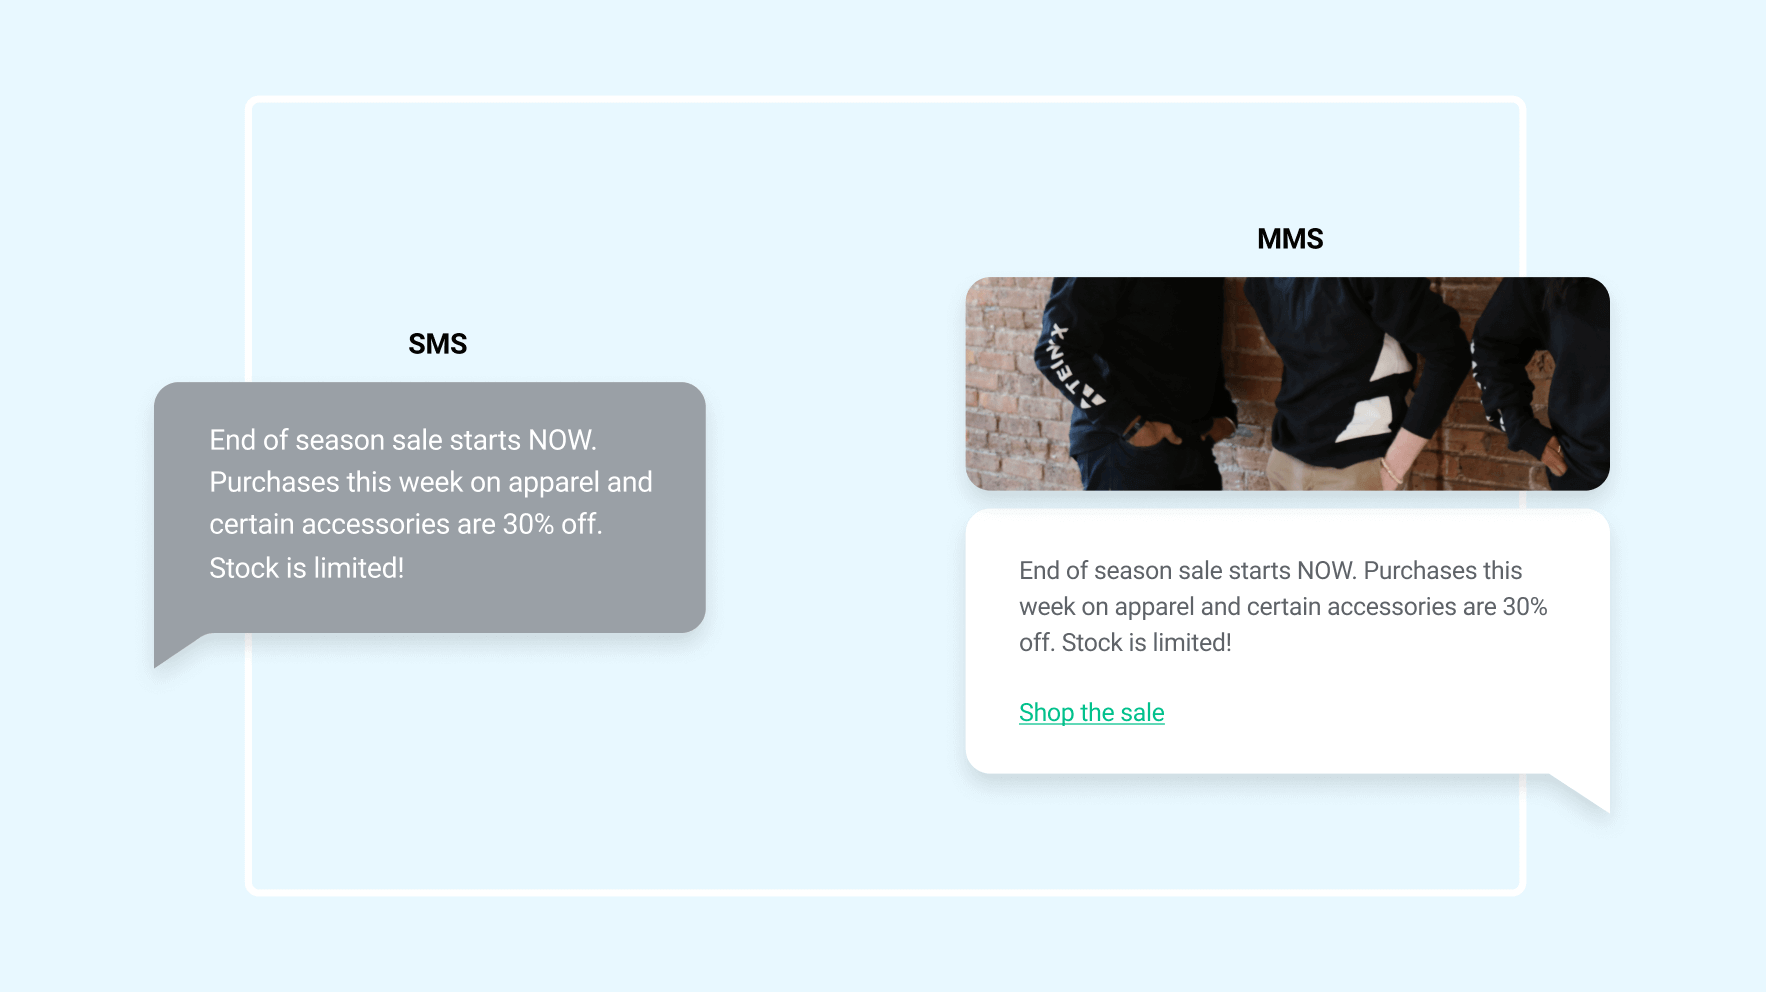 SMS vs MMS message comparison